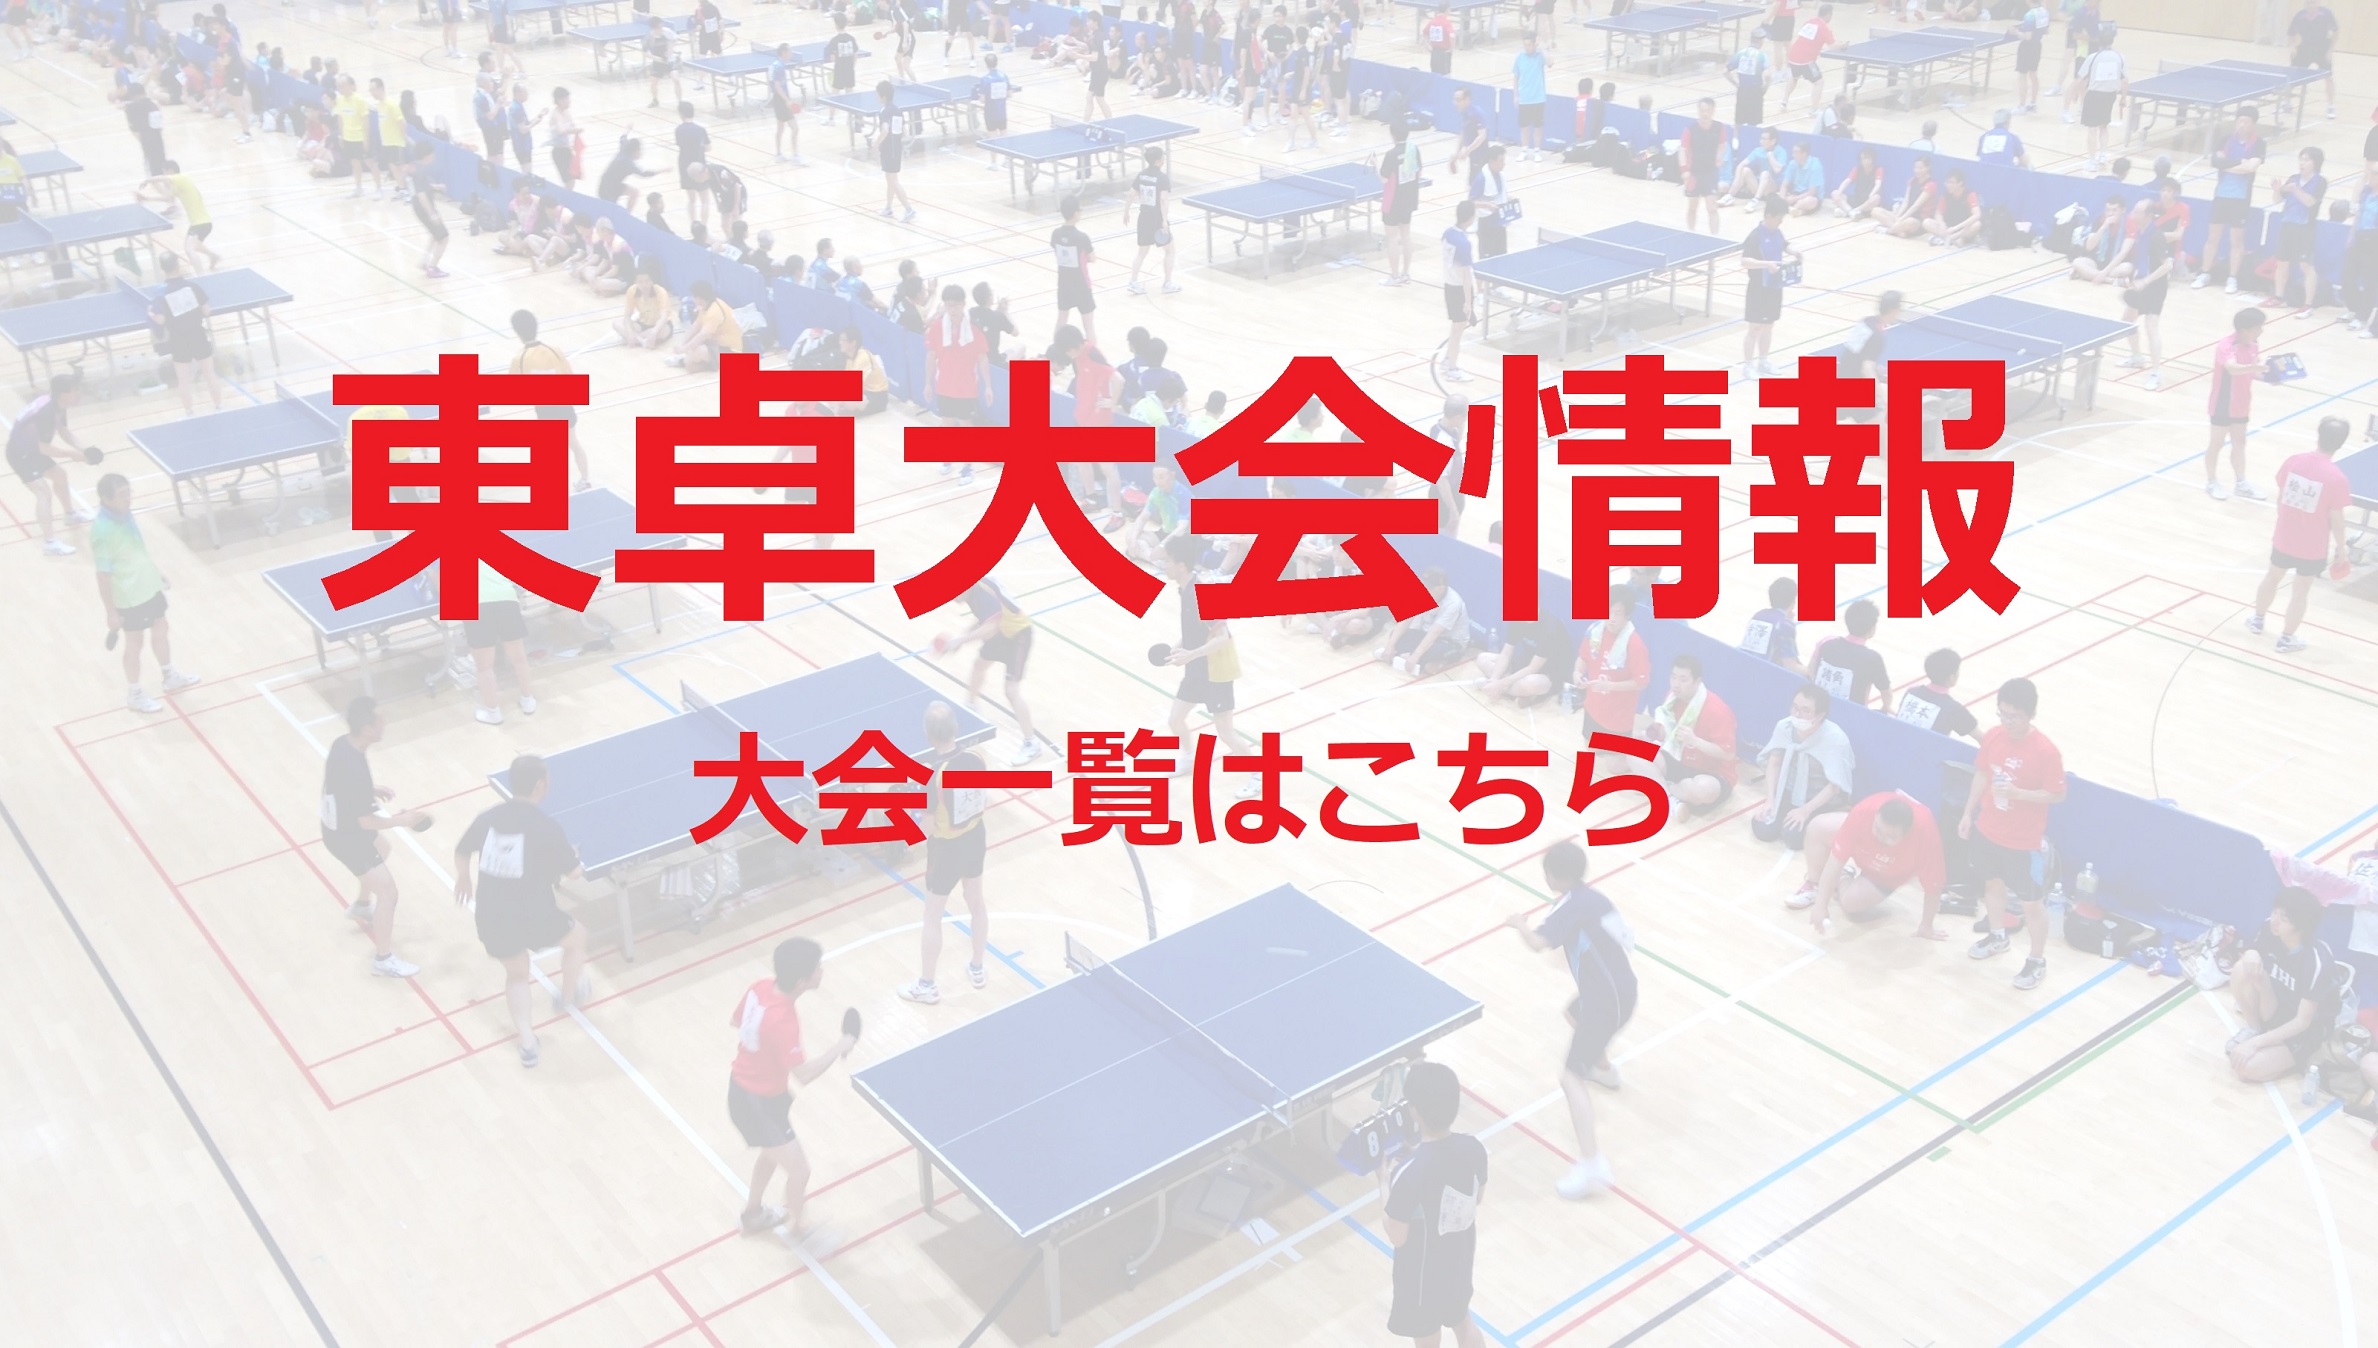 Tttf 東京都卓球連盟 公式サイト Home